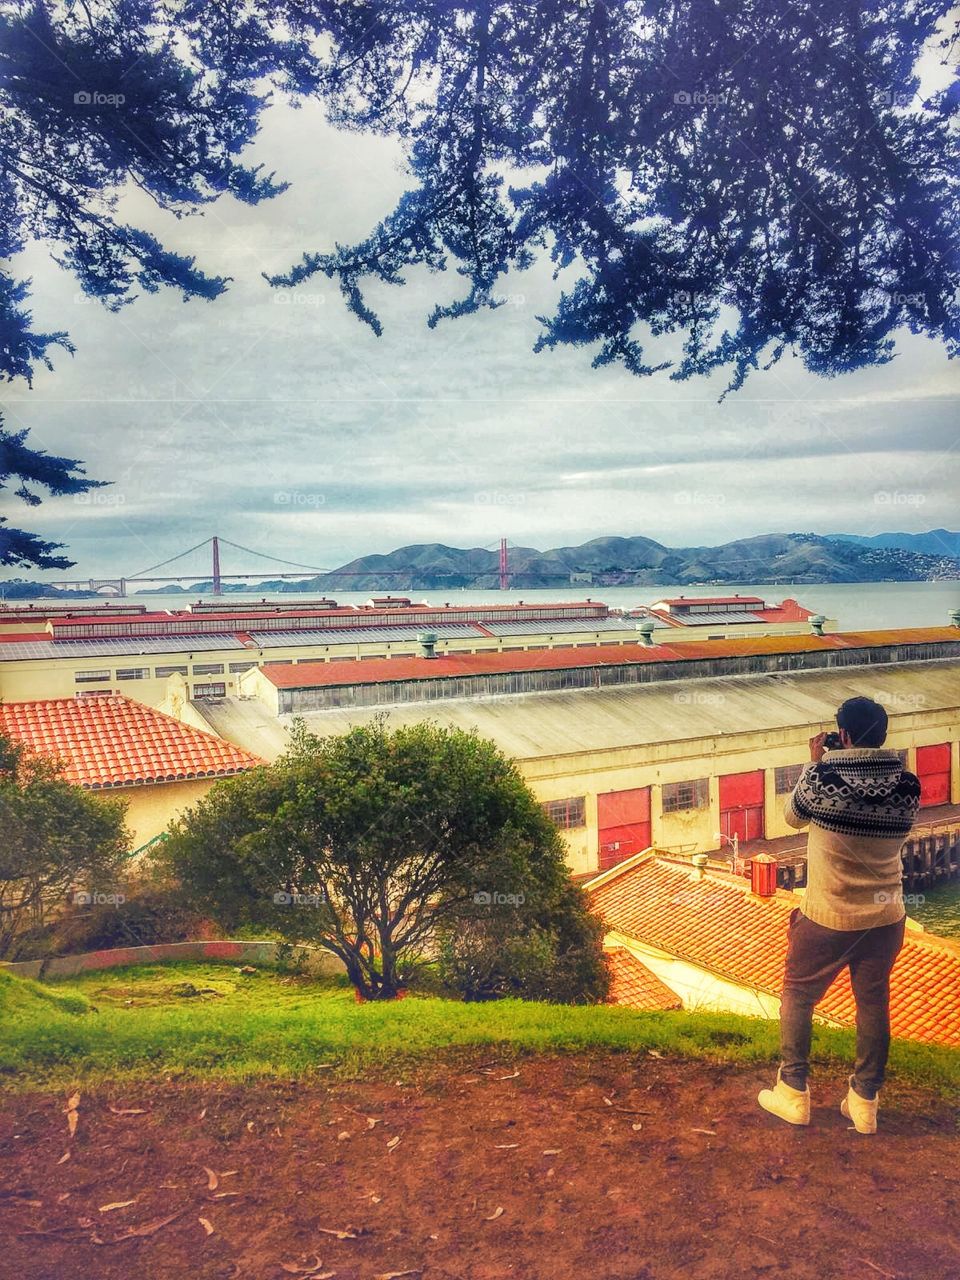 San Francisco, USA “golden gate bridge”